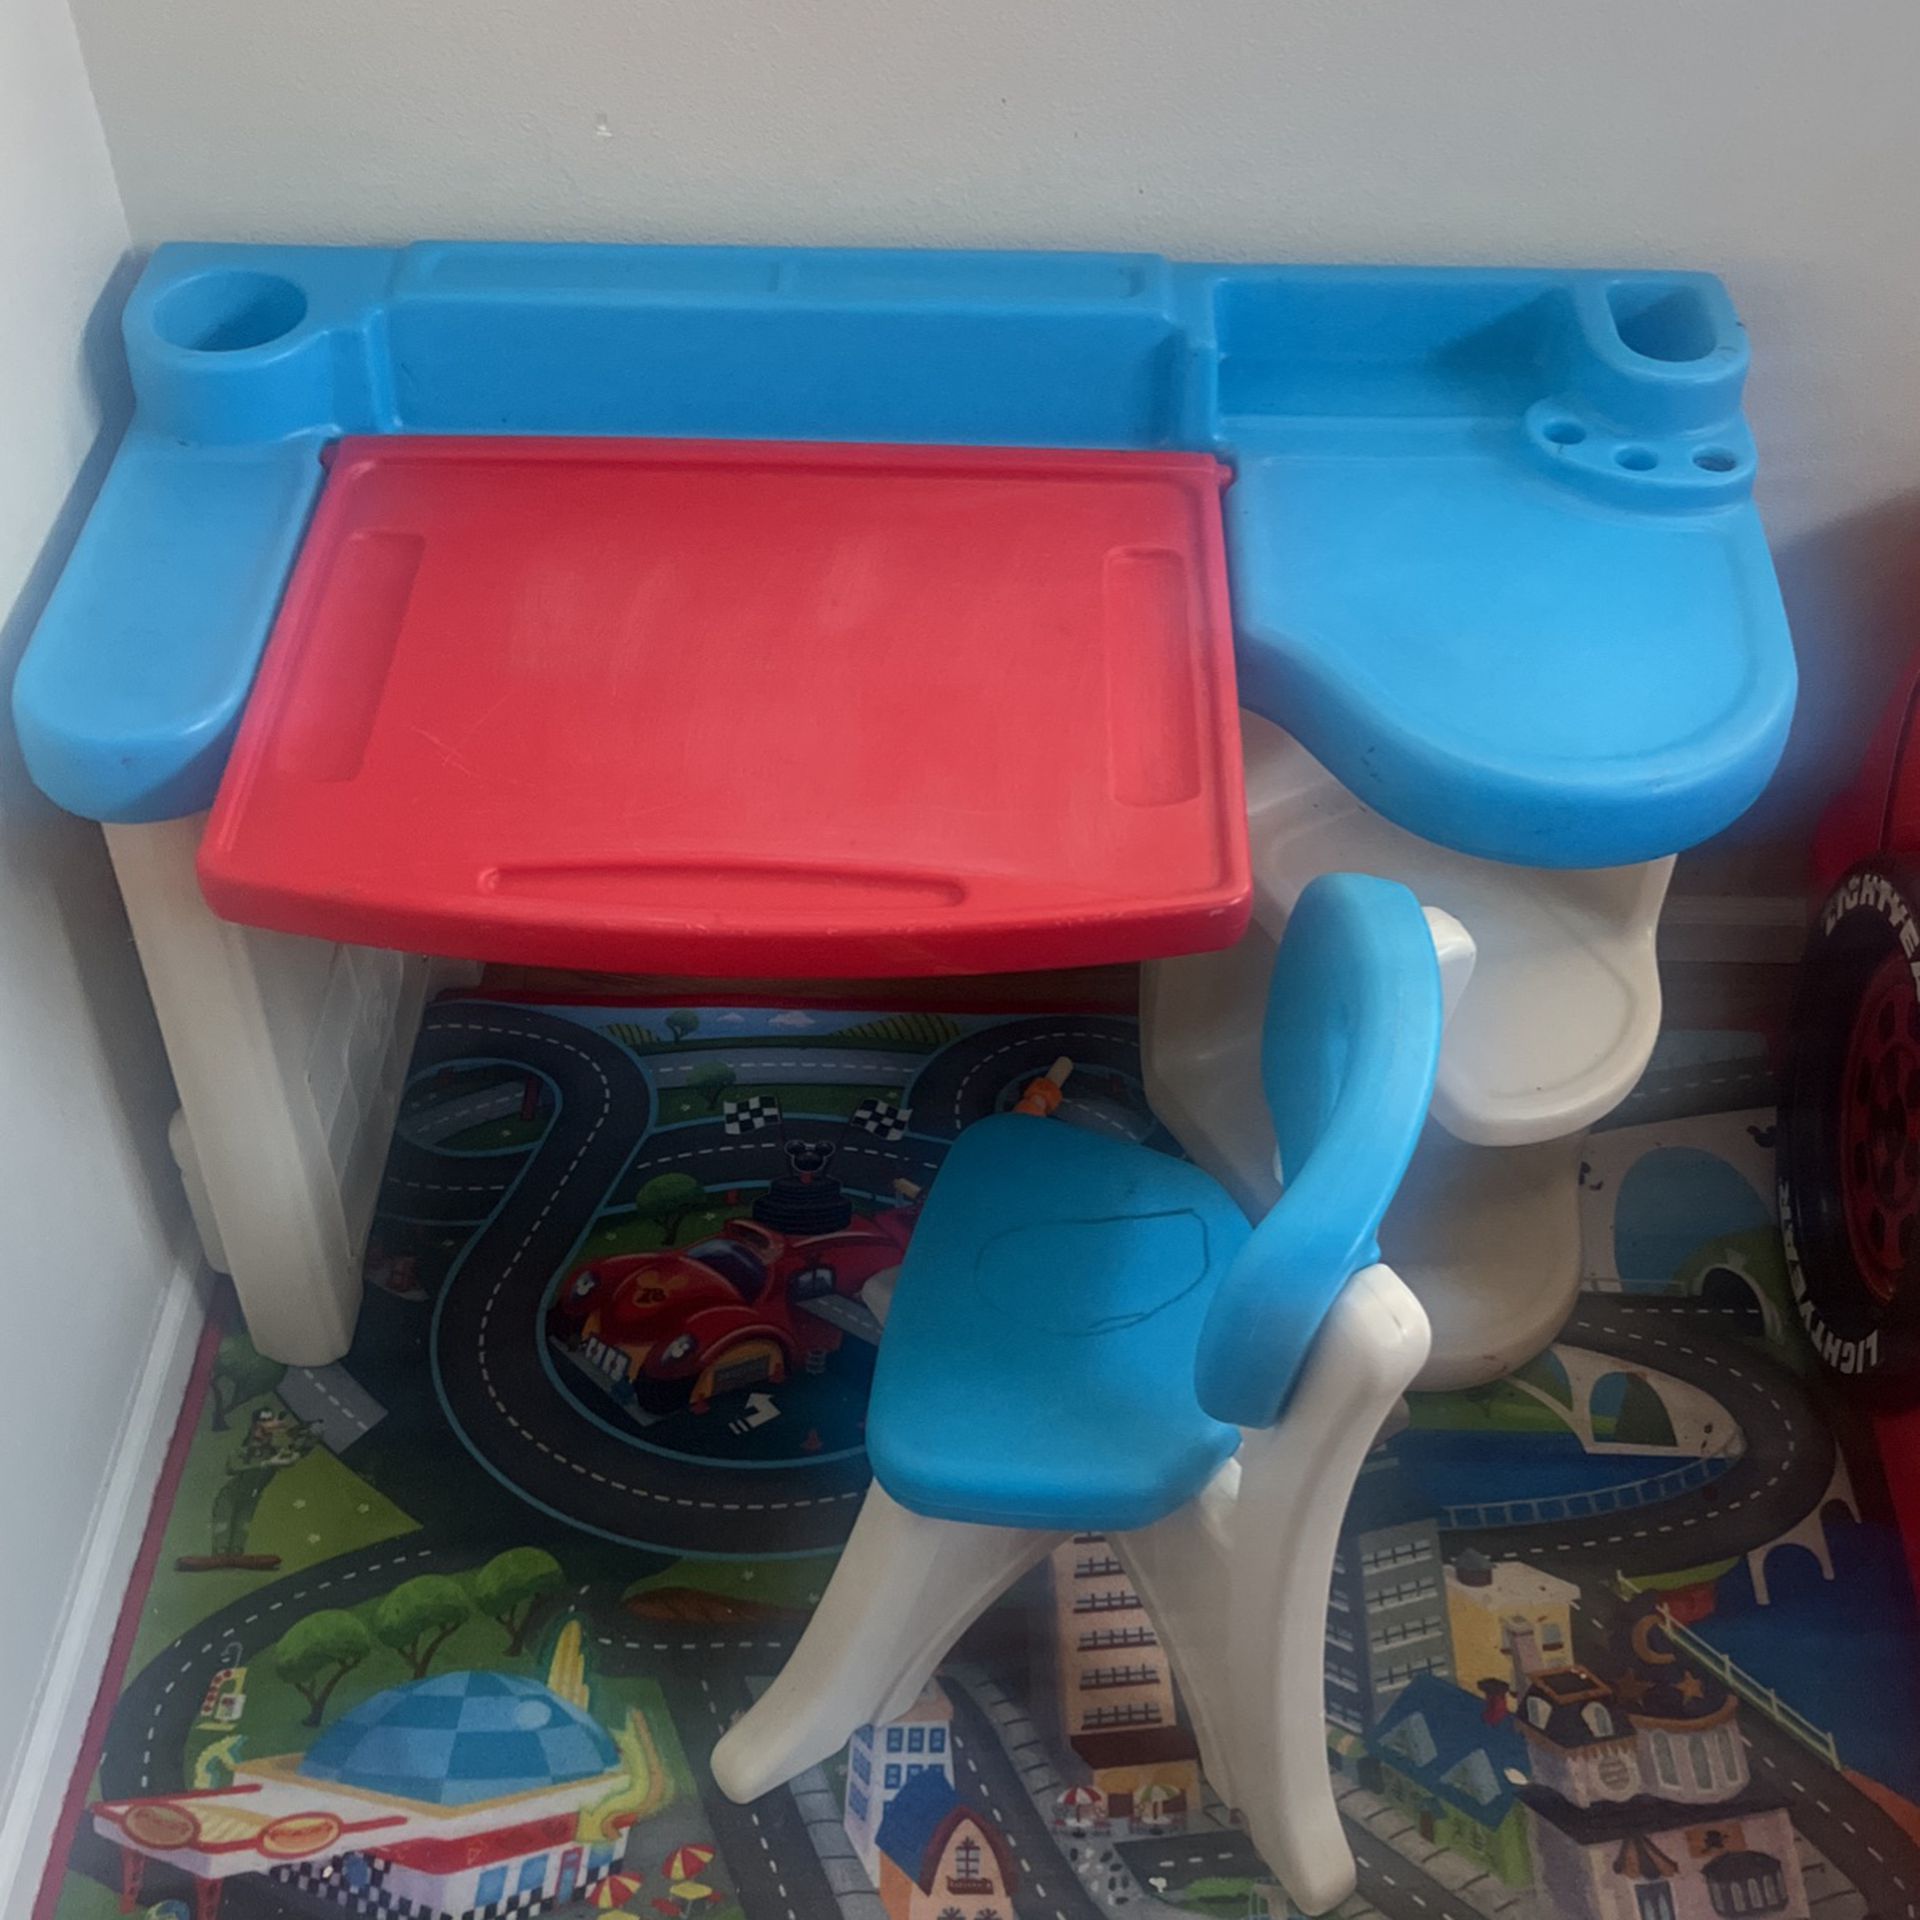 Toddler Desk